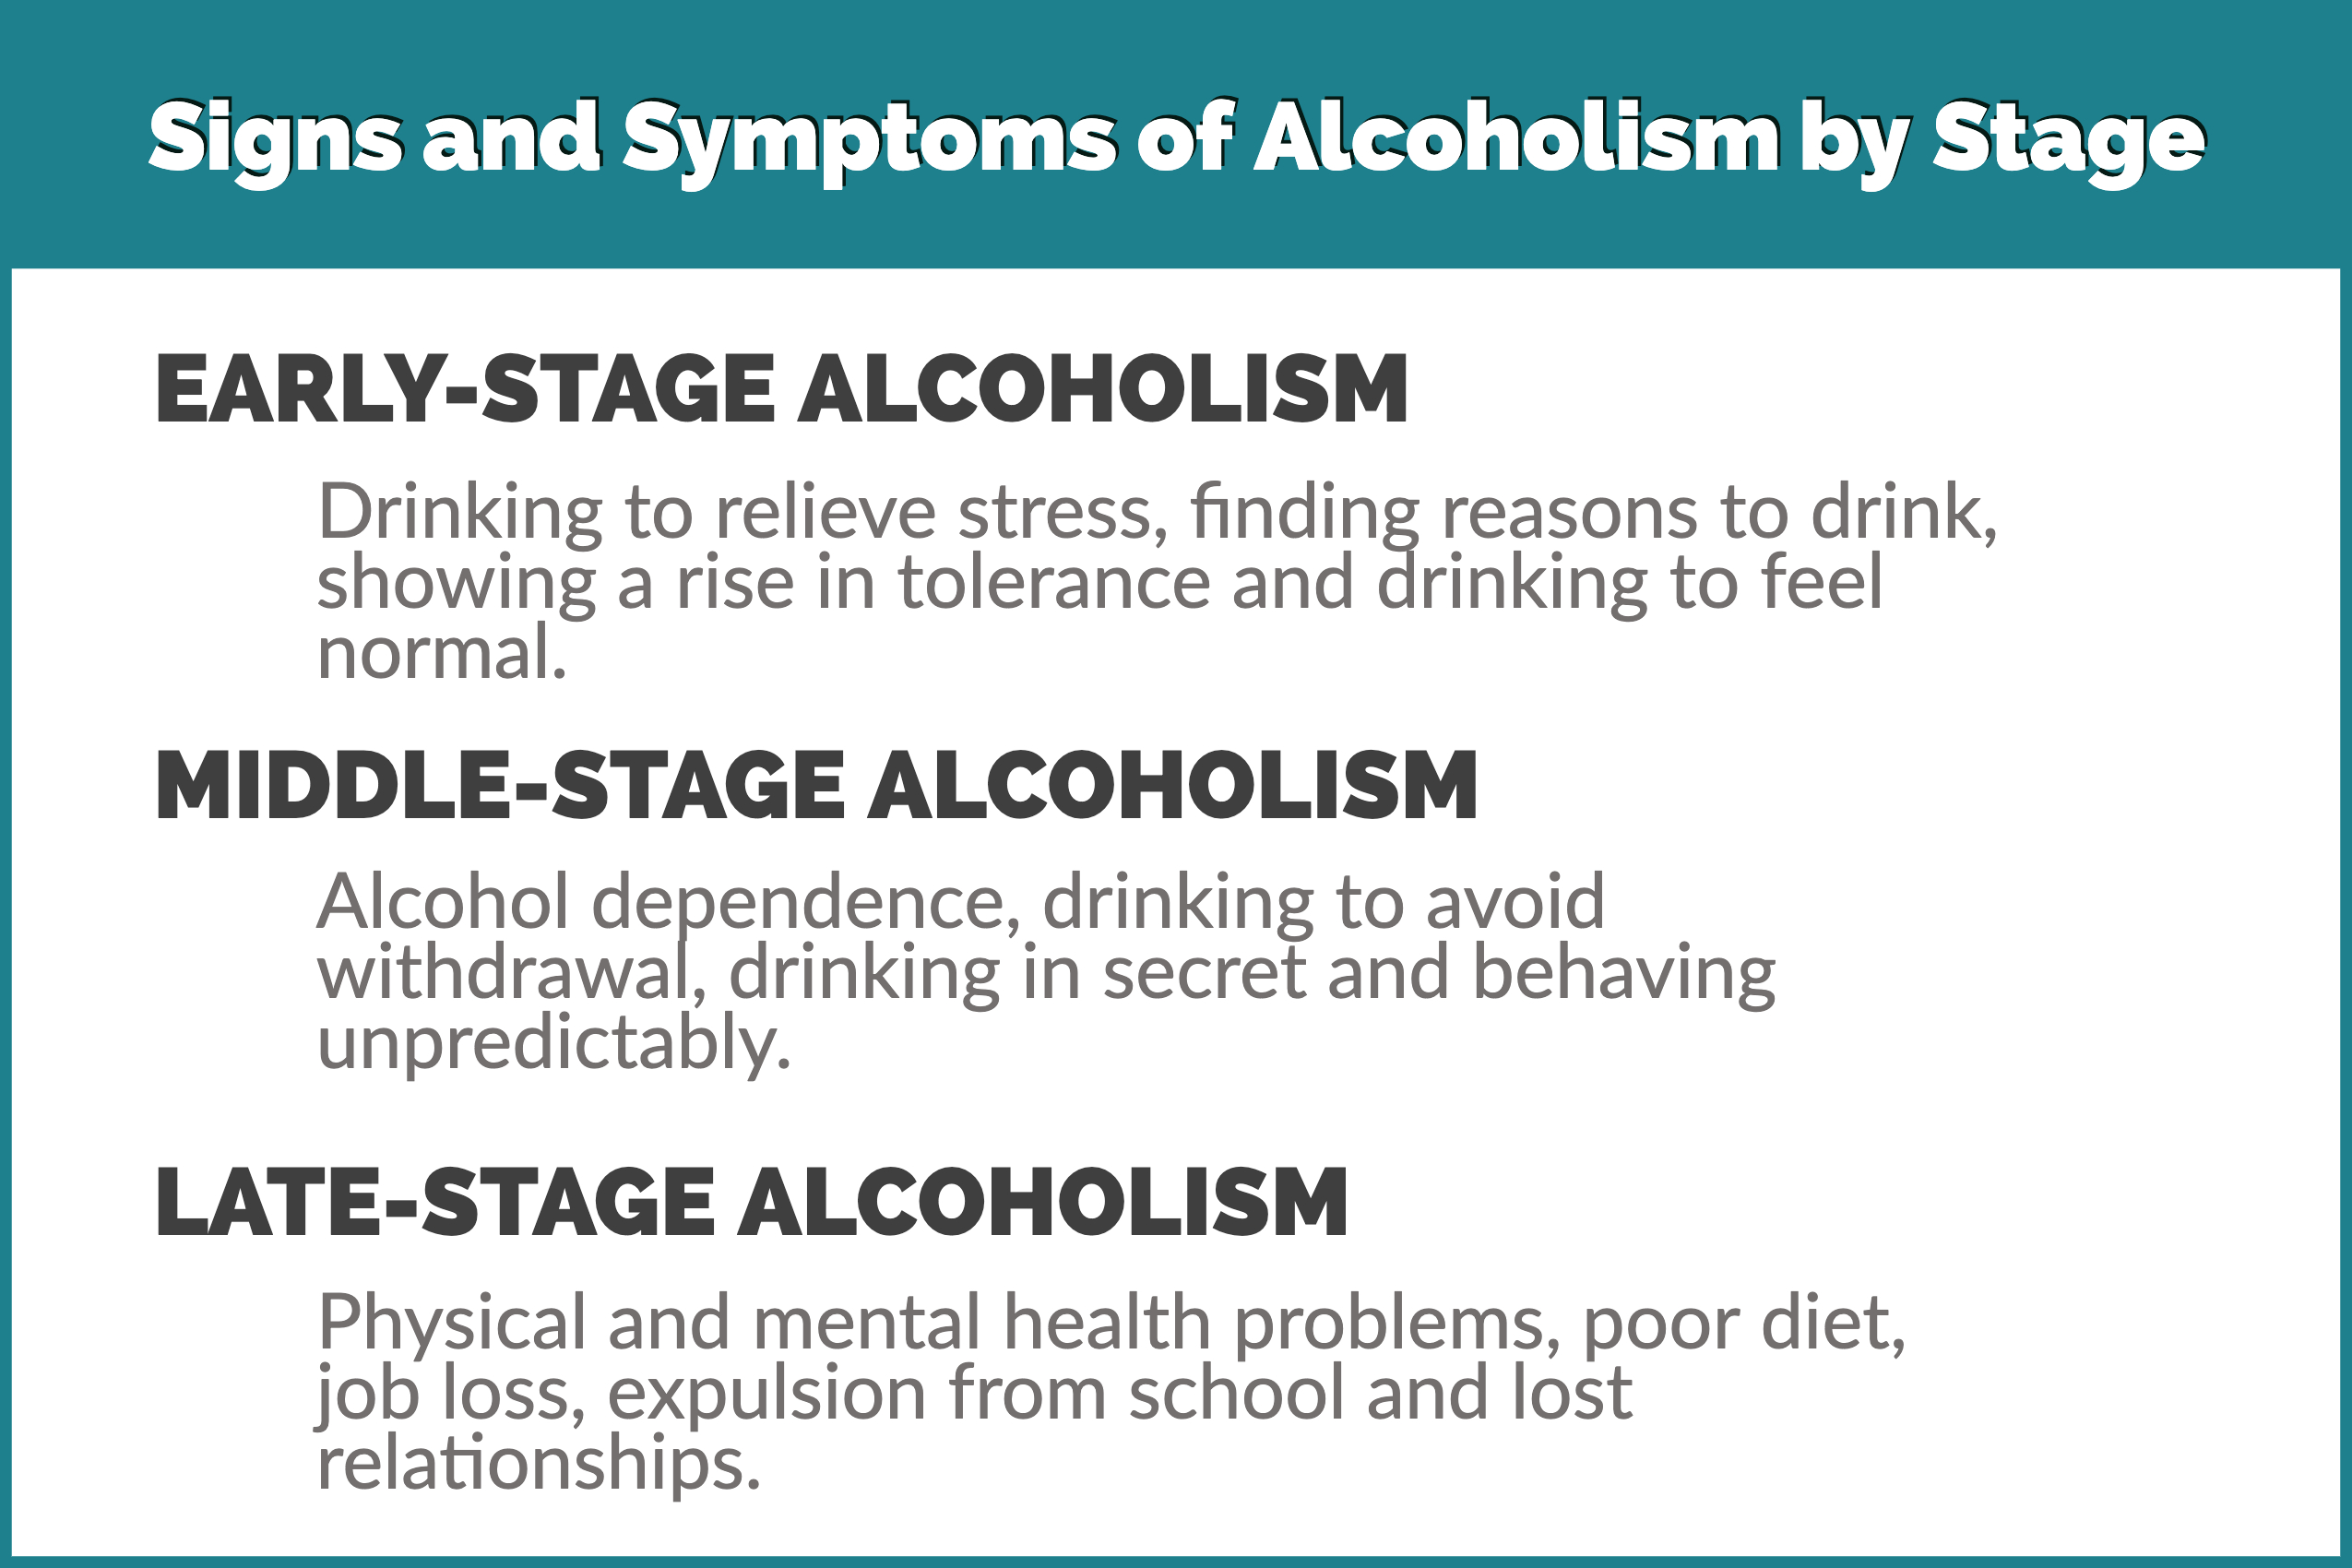 alcohol education